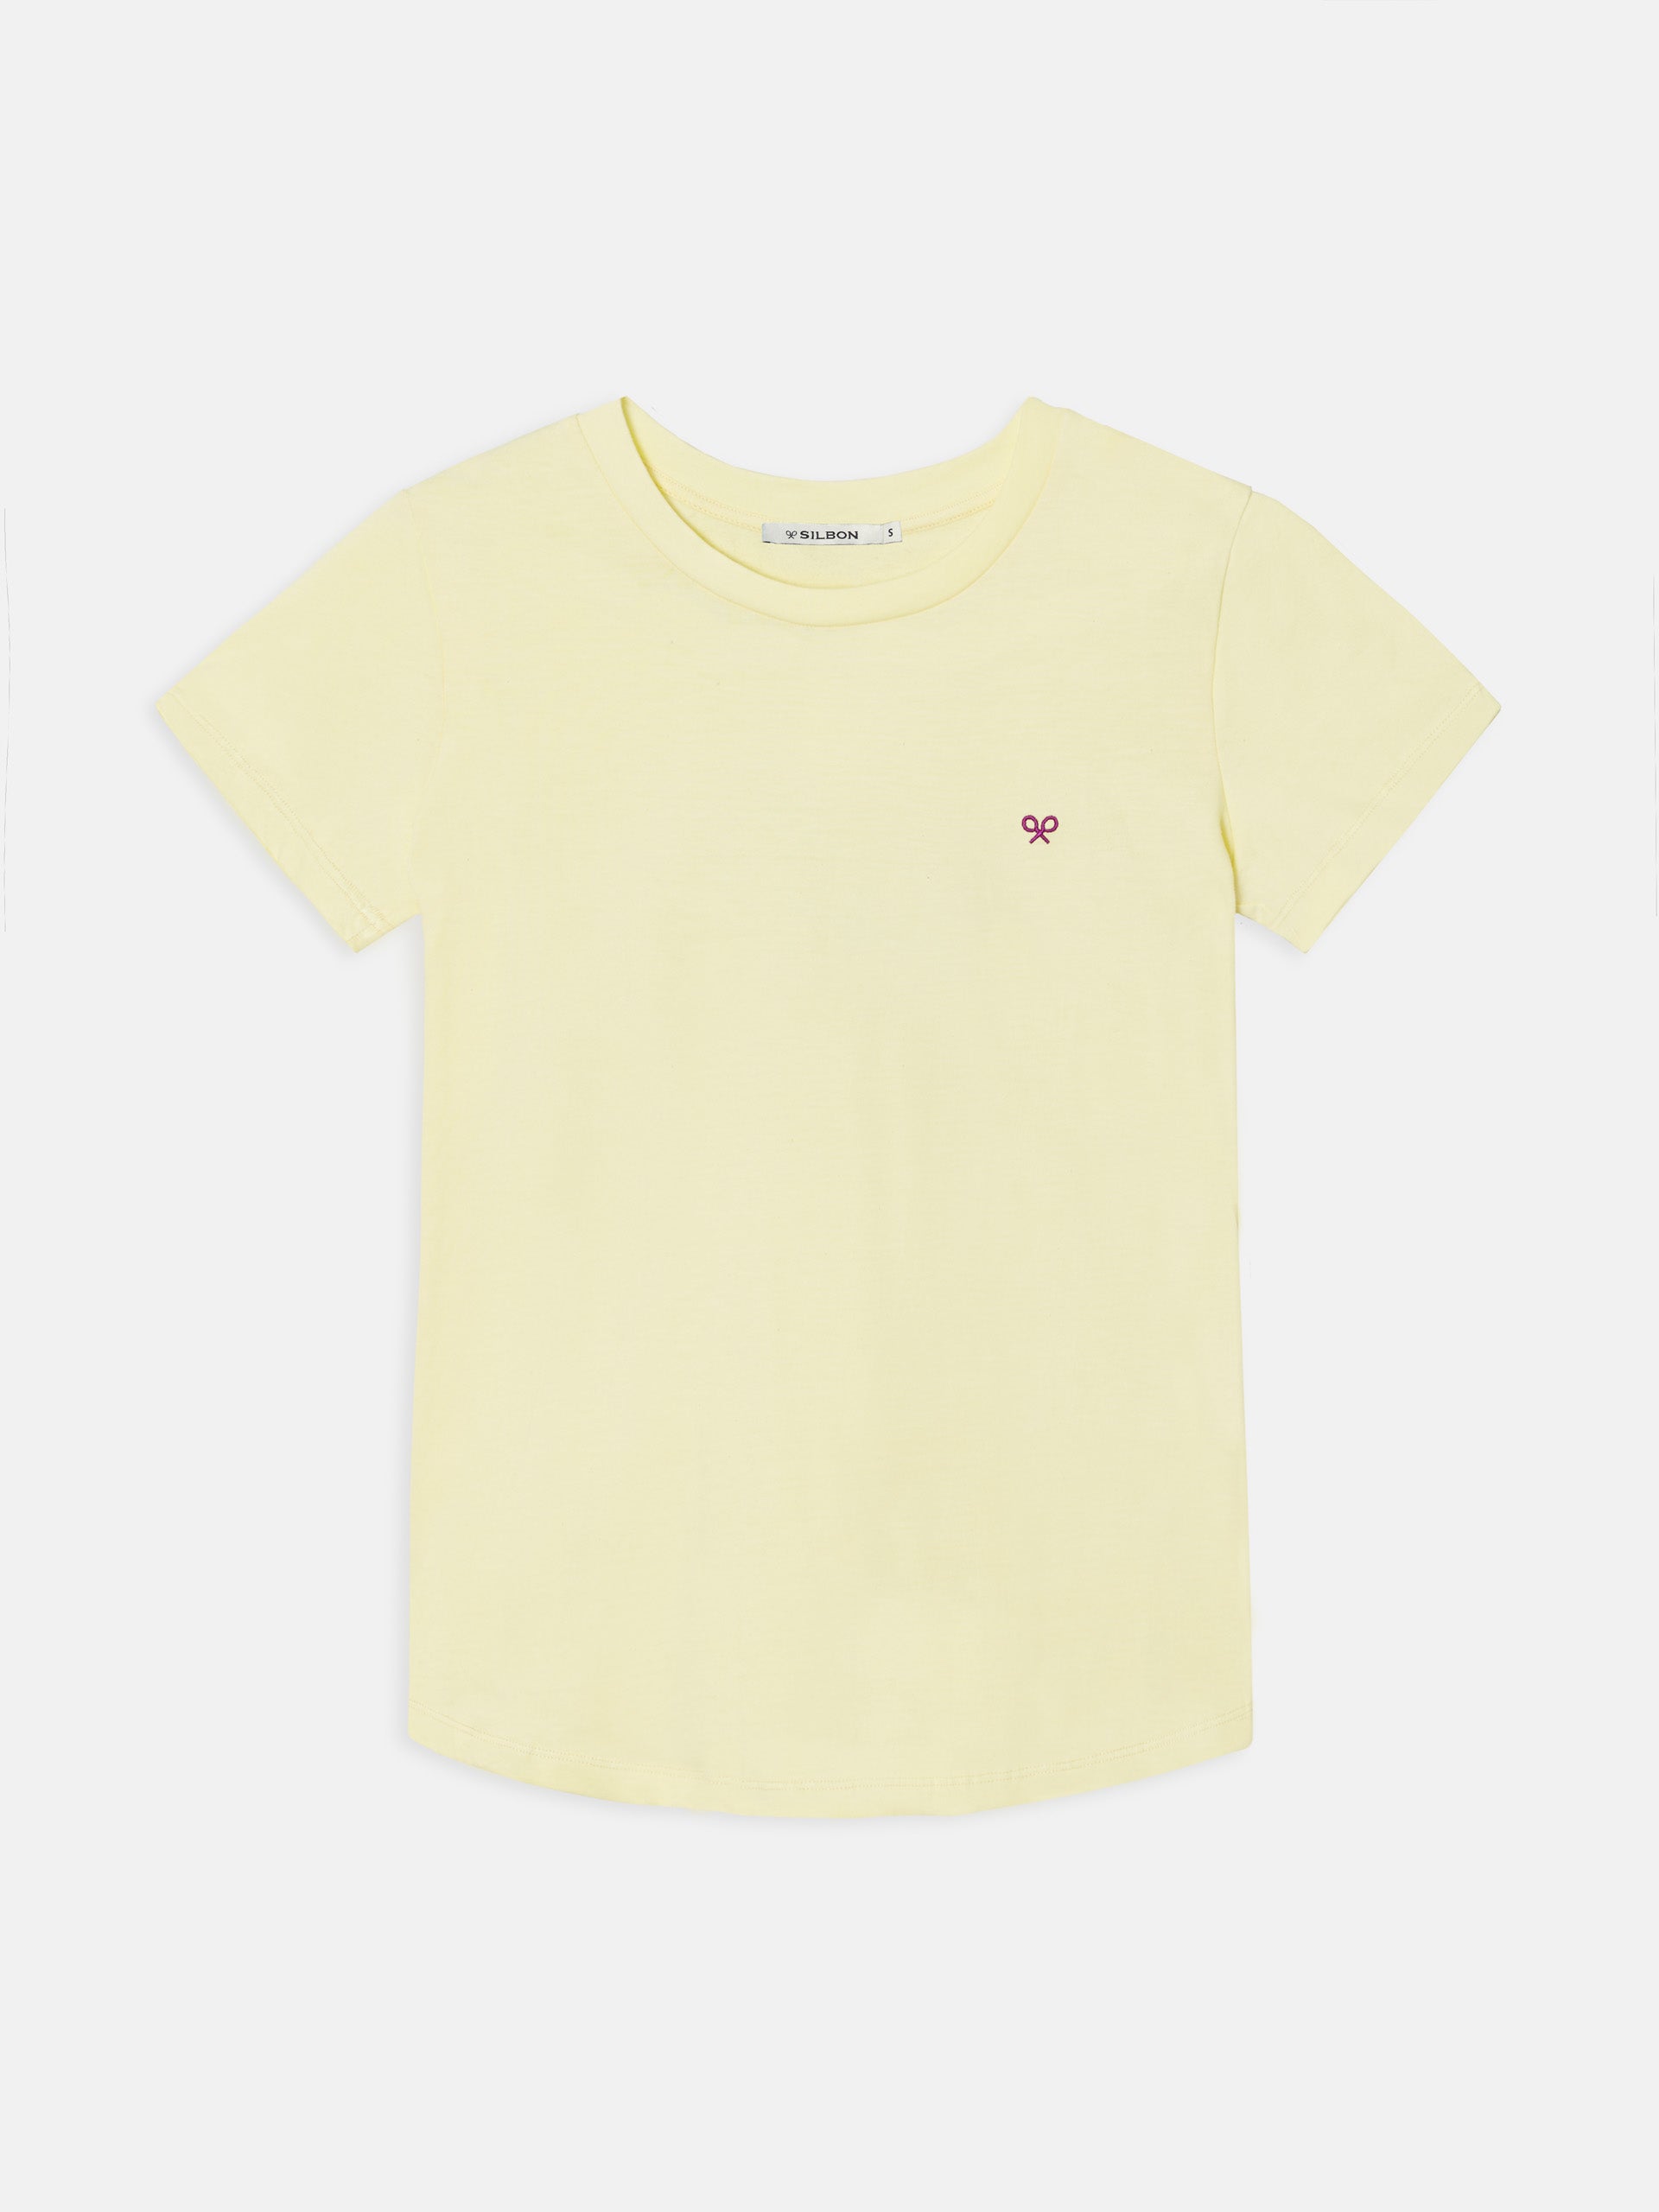 Camiseta woman smile amarilla